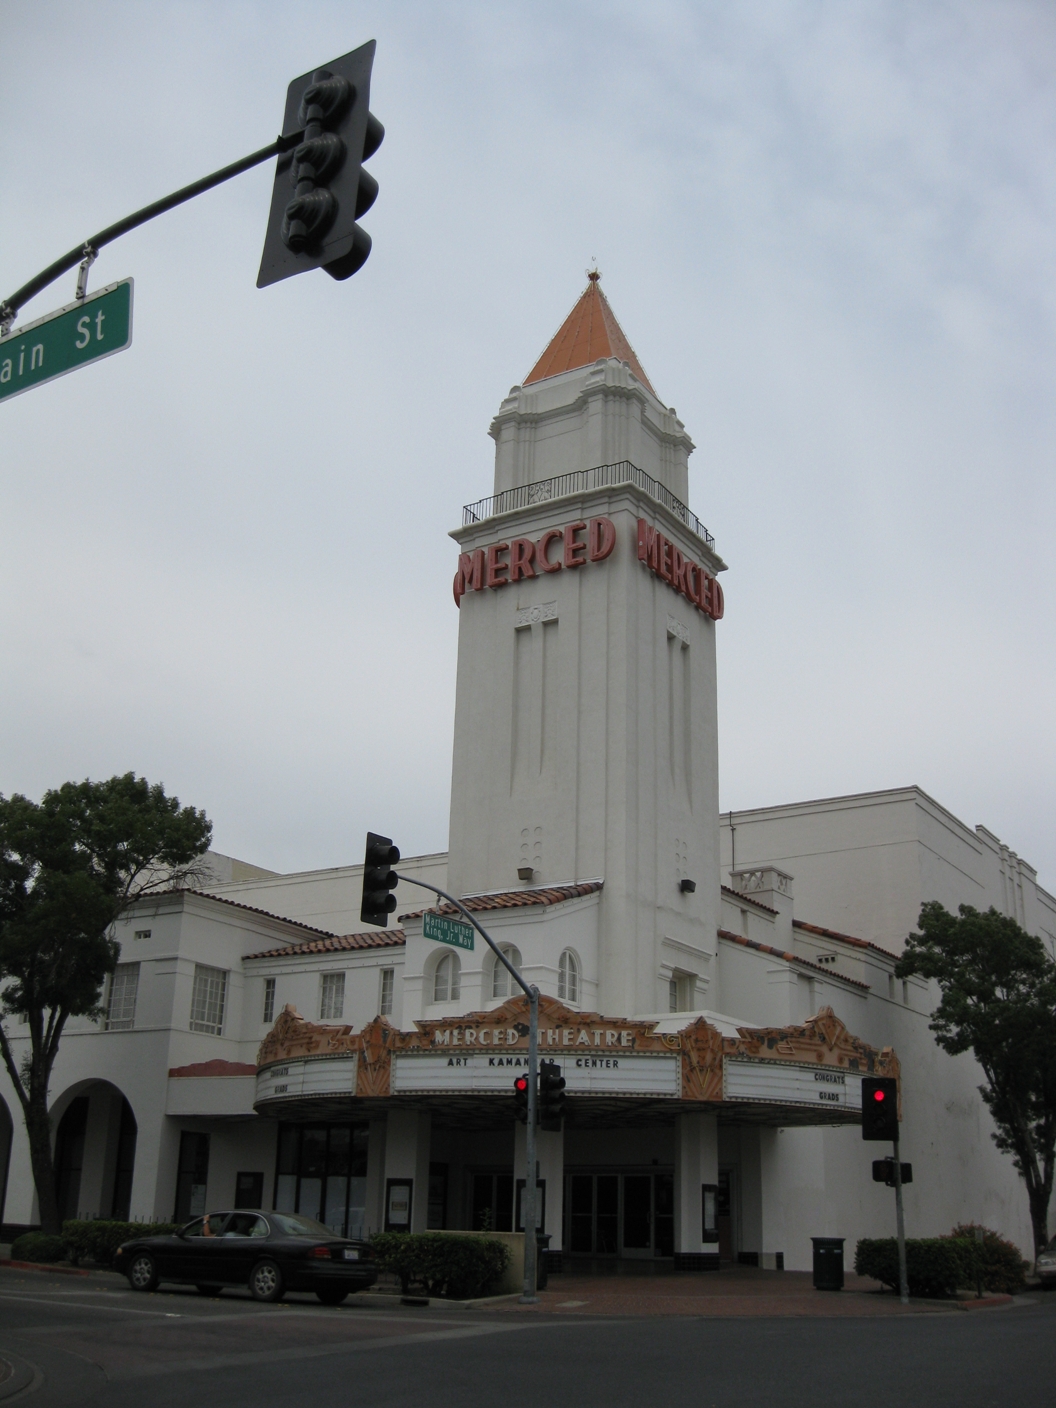 Merced Theater - Merced, CA Image